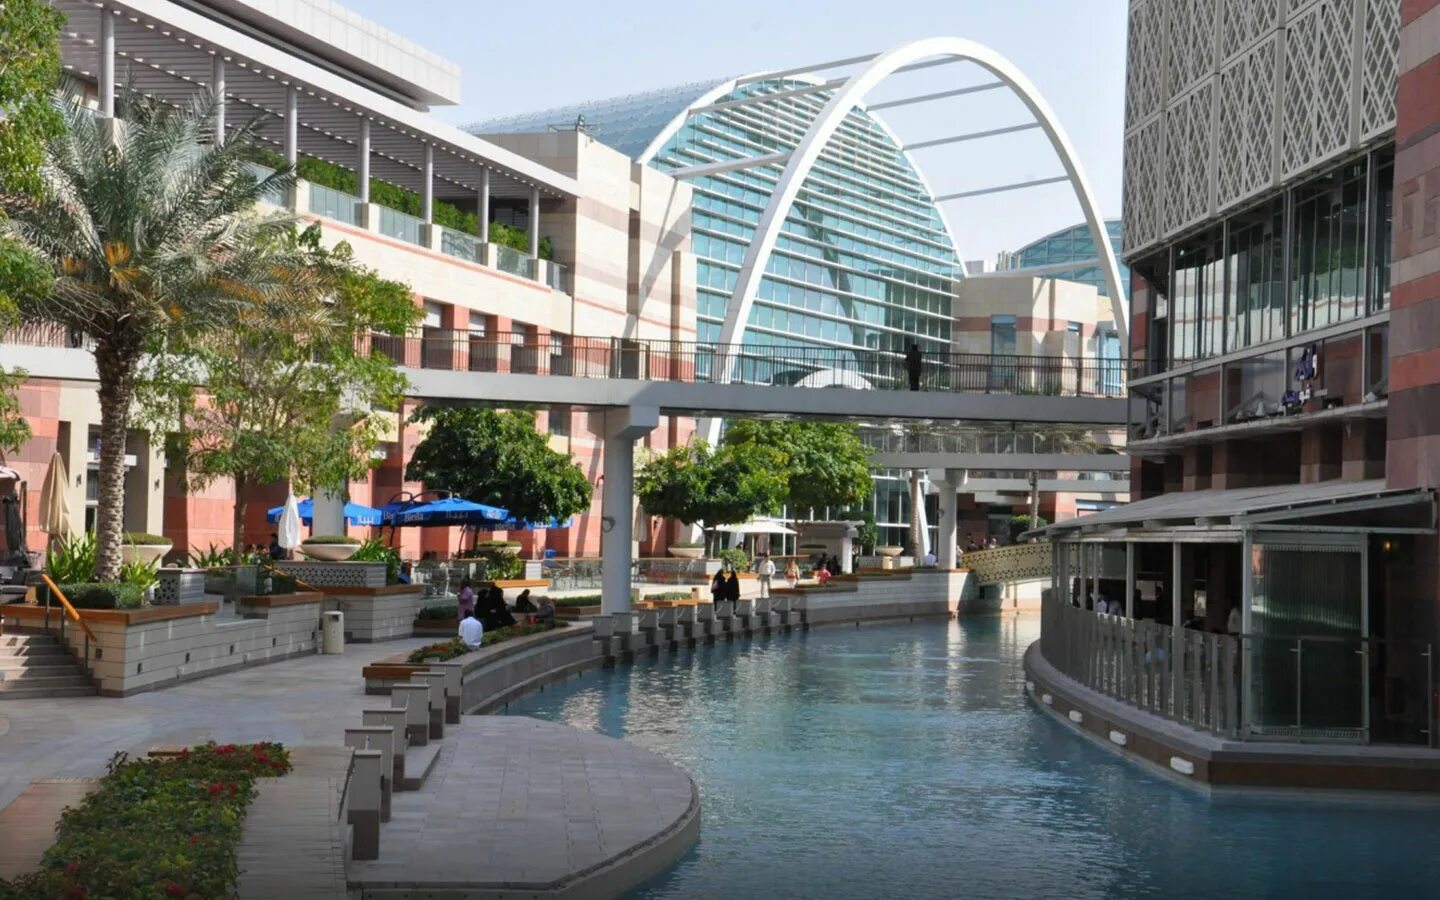 Festival City Mall Дубай. Дубай фестиваль Сити Молл. Парковка Dubai Festival City Mall. Dubai Mall Waterfront Promenade. Сити молл дубай